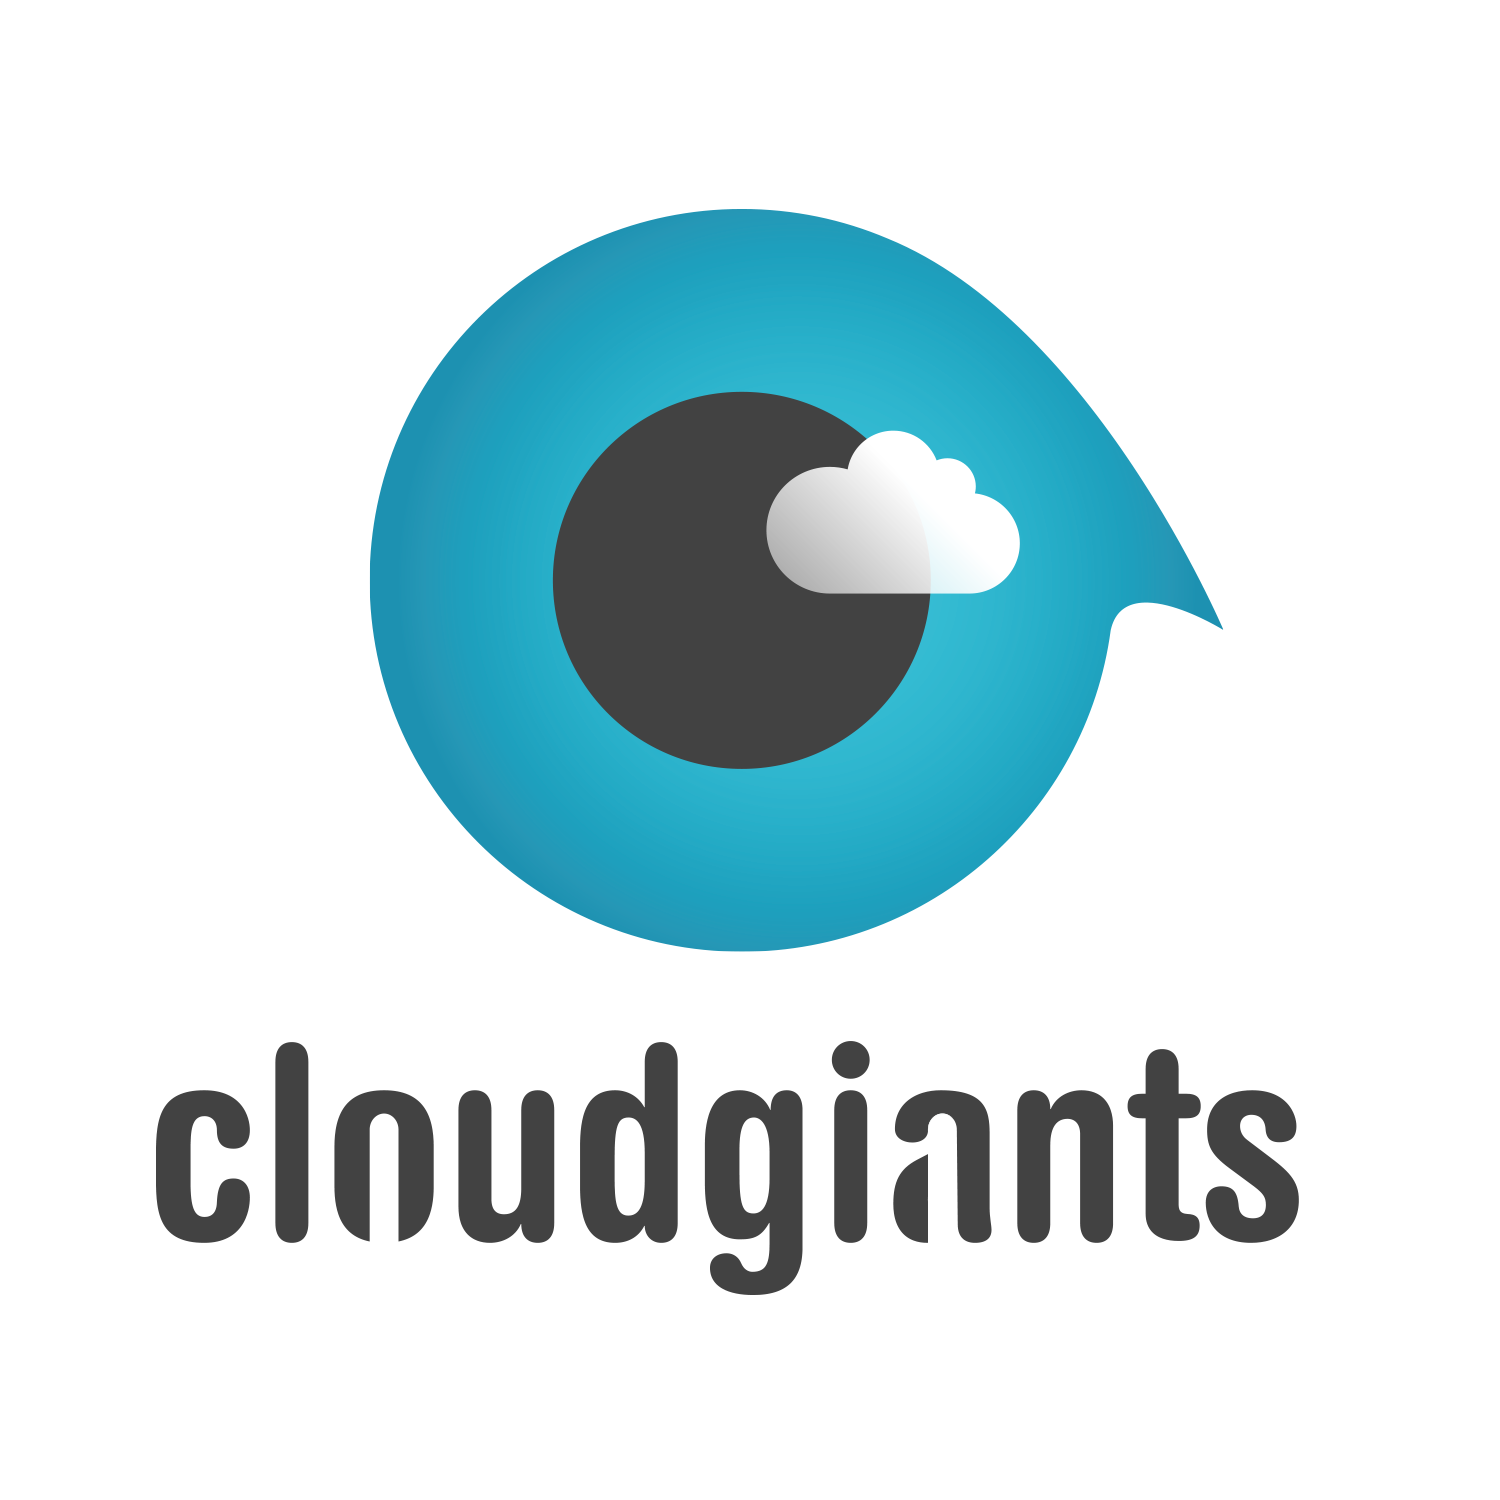 Cloud Giants